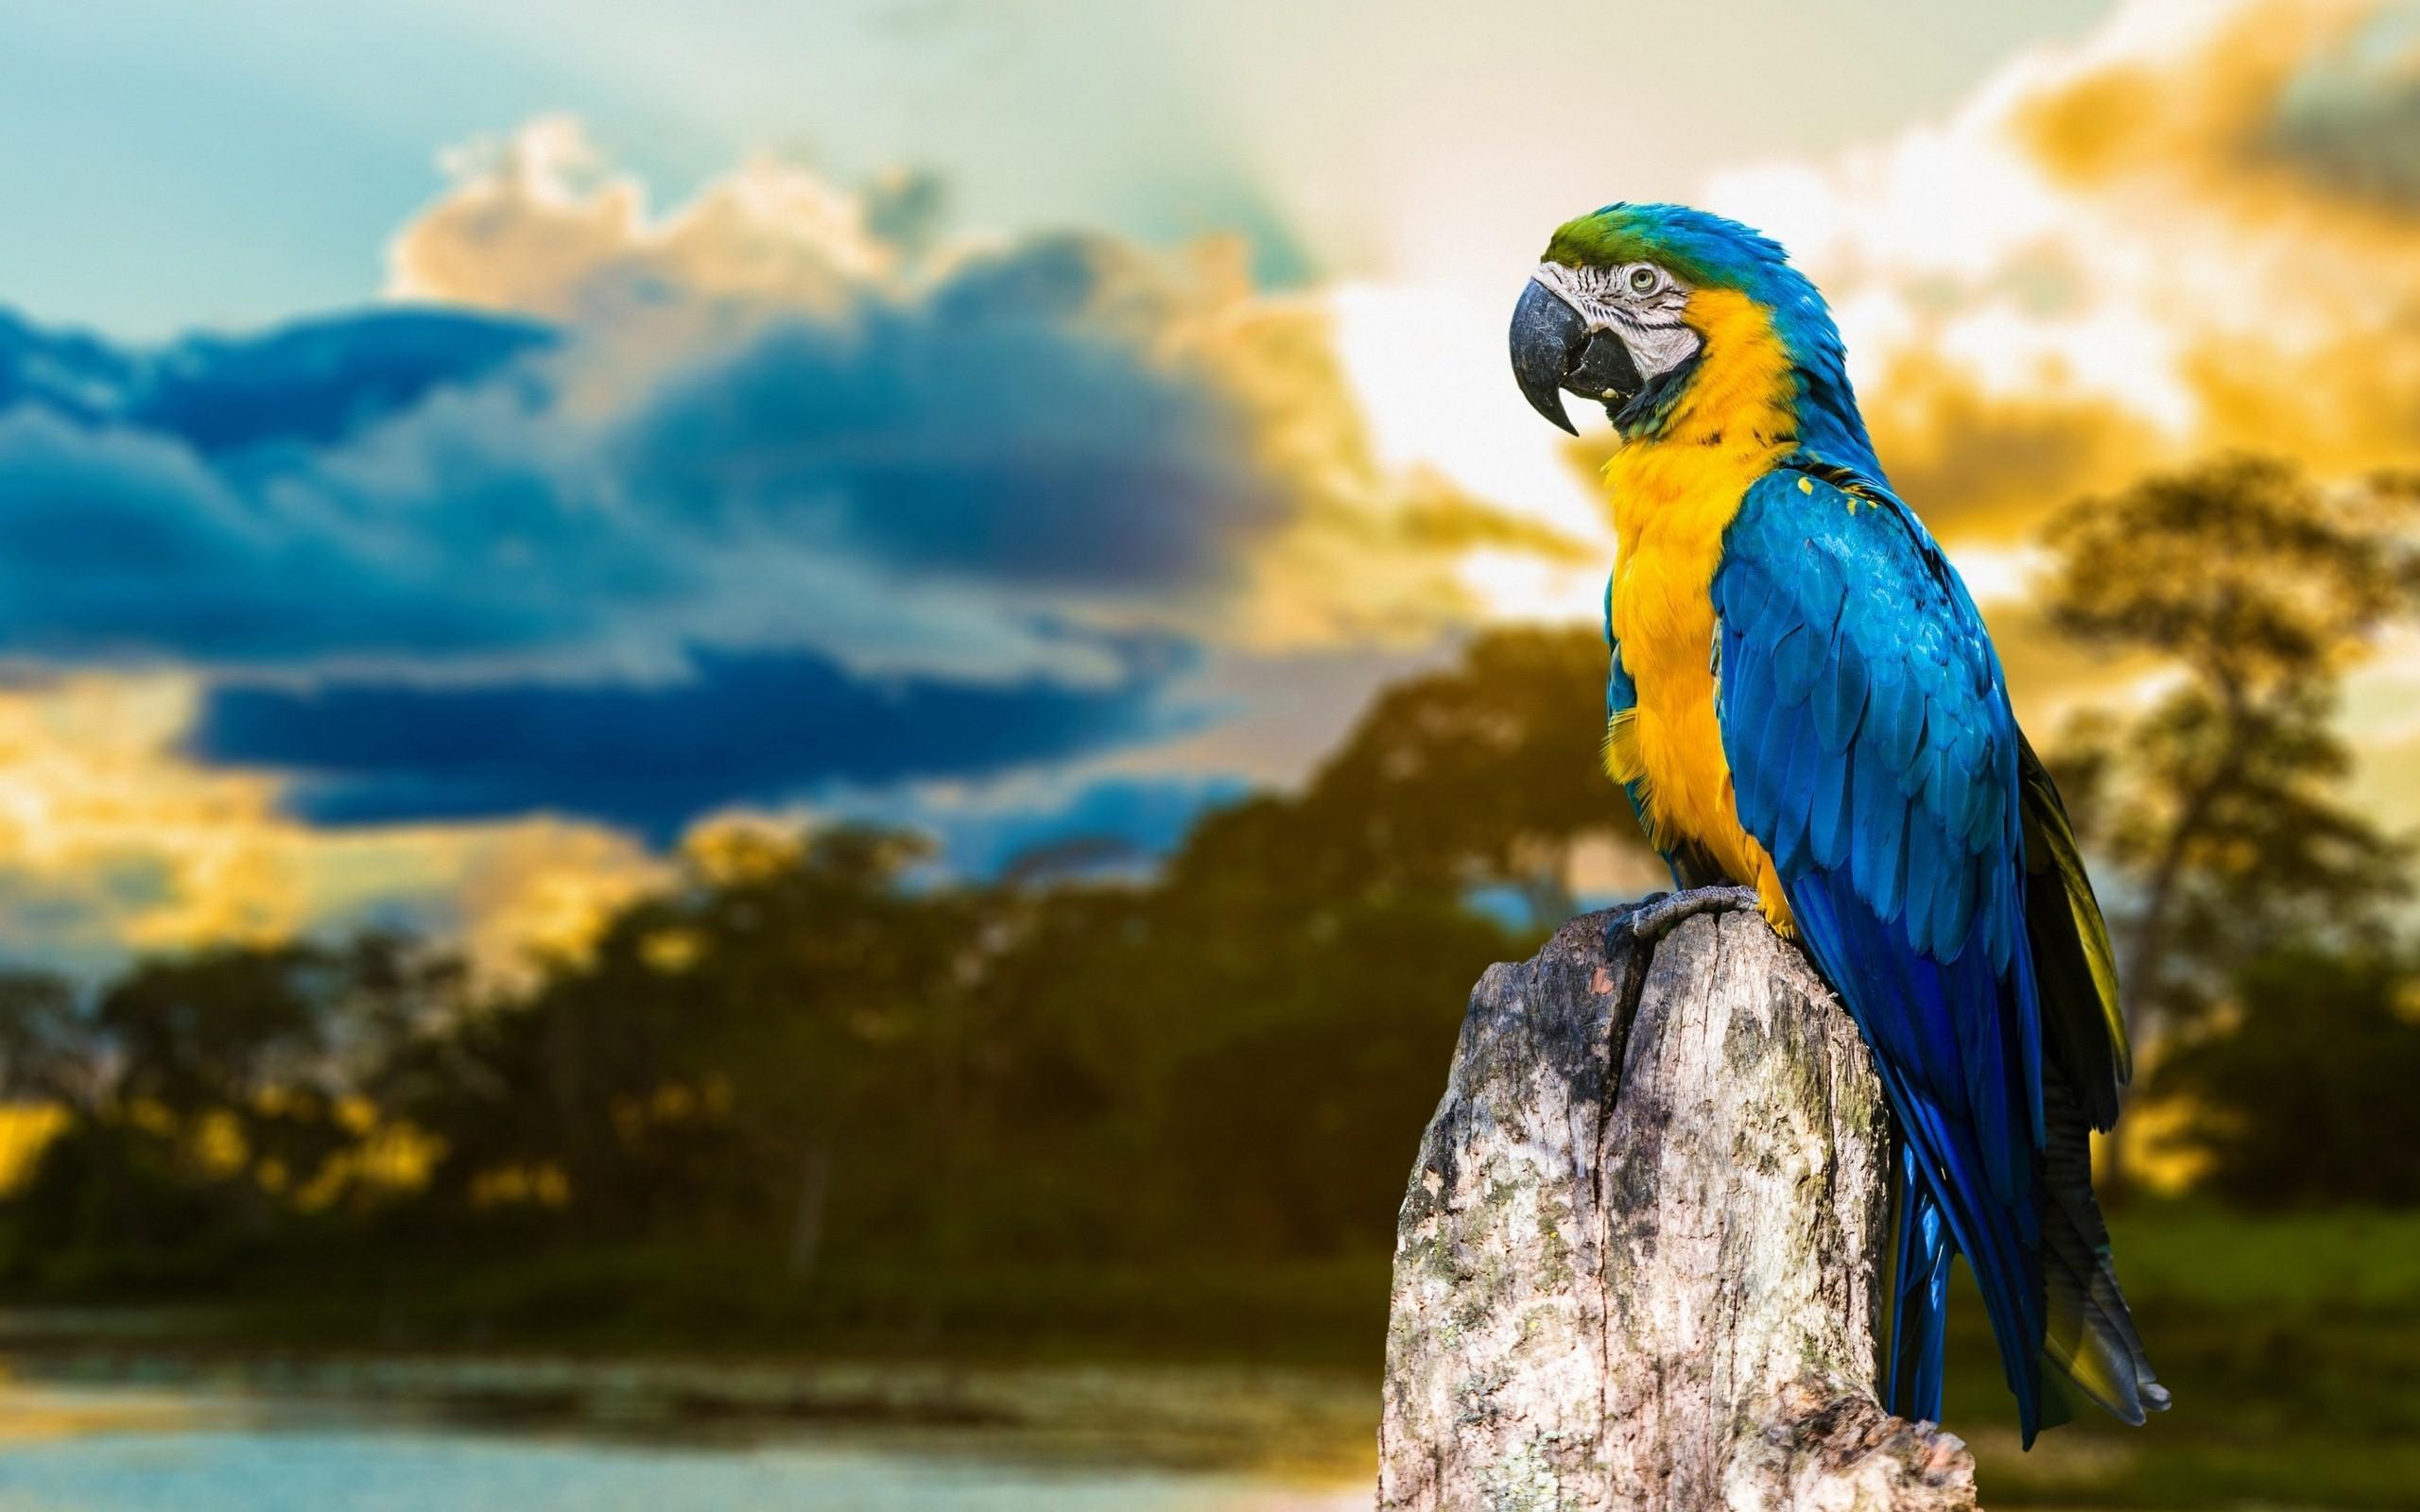 Beautiful Tropical Birds Colorful Parrots Love Birds Parrots On Branch 4k  Ultra Hd 1610 Desktop Backgrounds For Pc & Mac Laptop Tablet Mobile Phone :  Wallpapers13.com